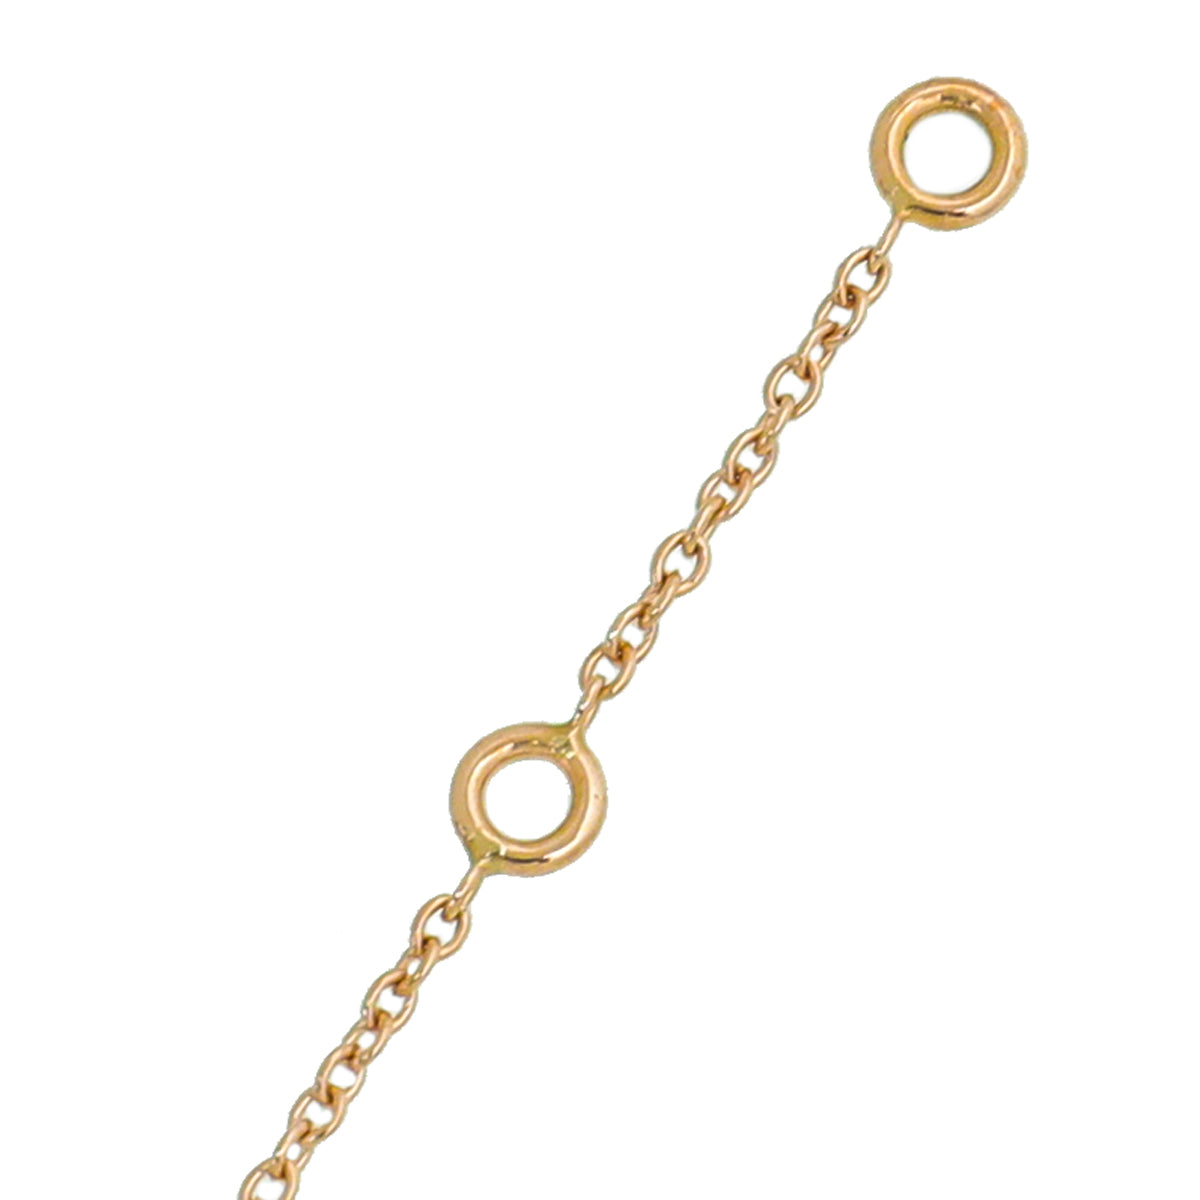 Hermes 18K Rose Gold Farandole Pendant Necklace Small